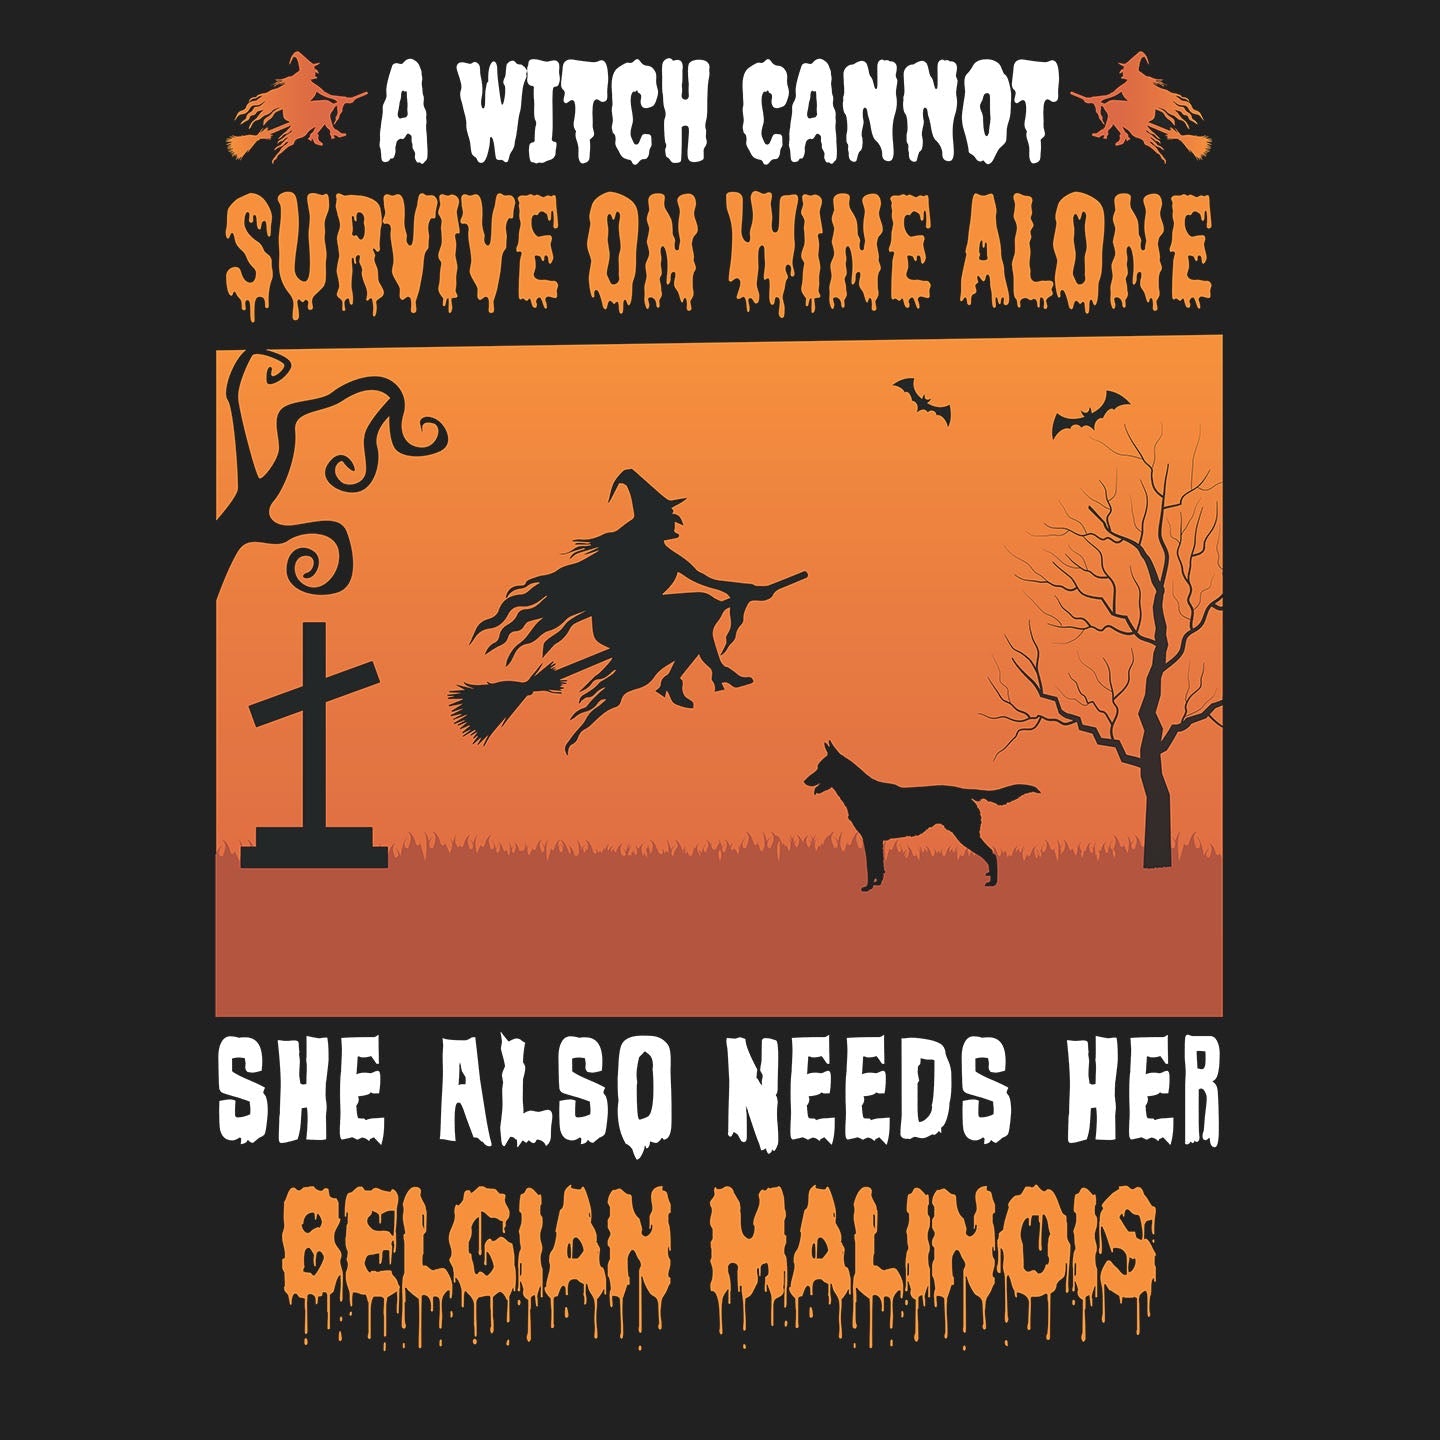 A Witch Needs Her Belgian Malinois - Adult Unisex Crewneck Sweatshirt